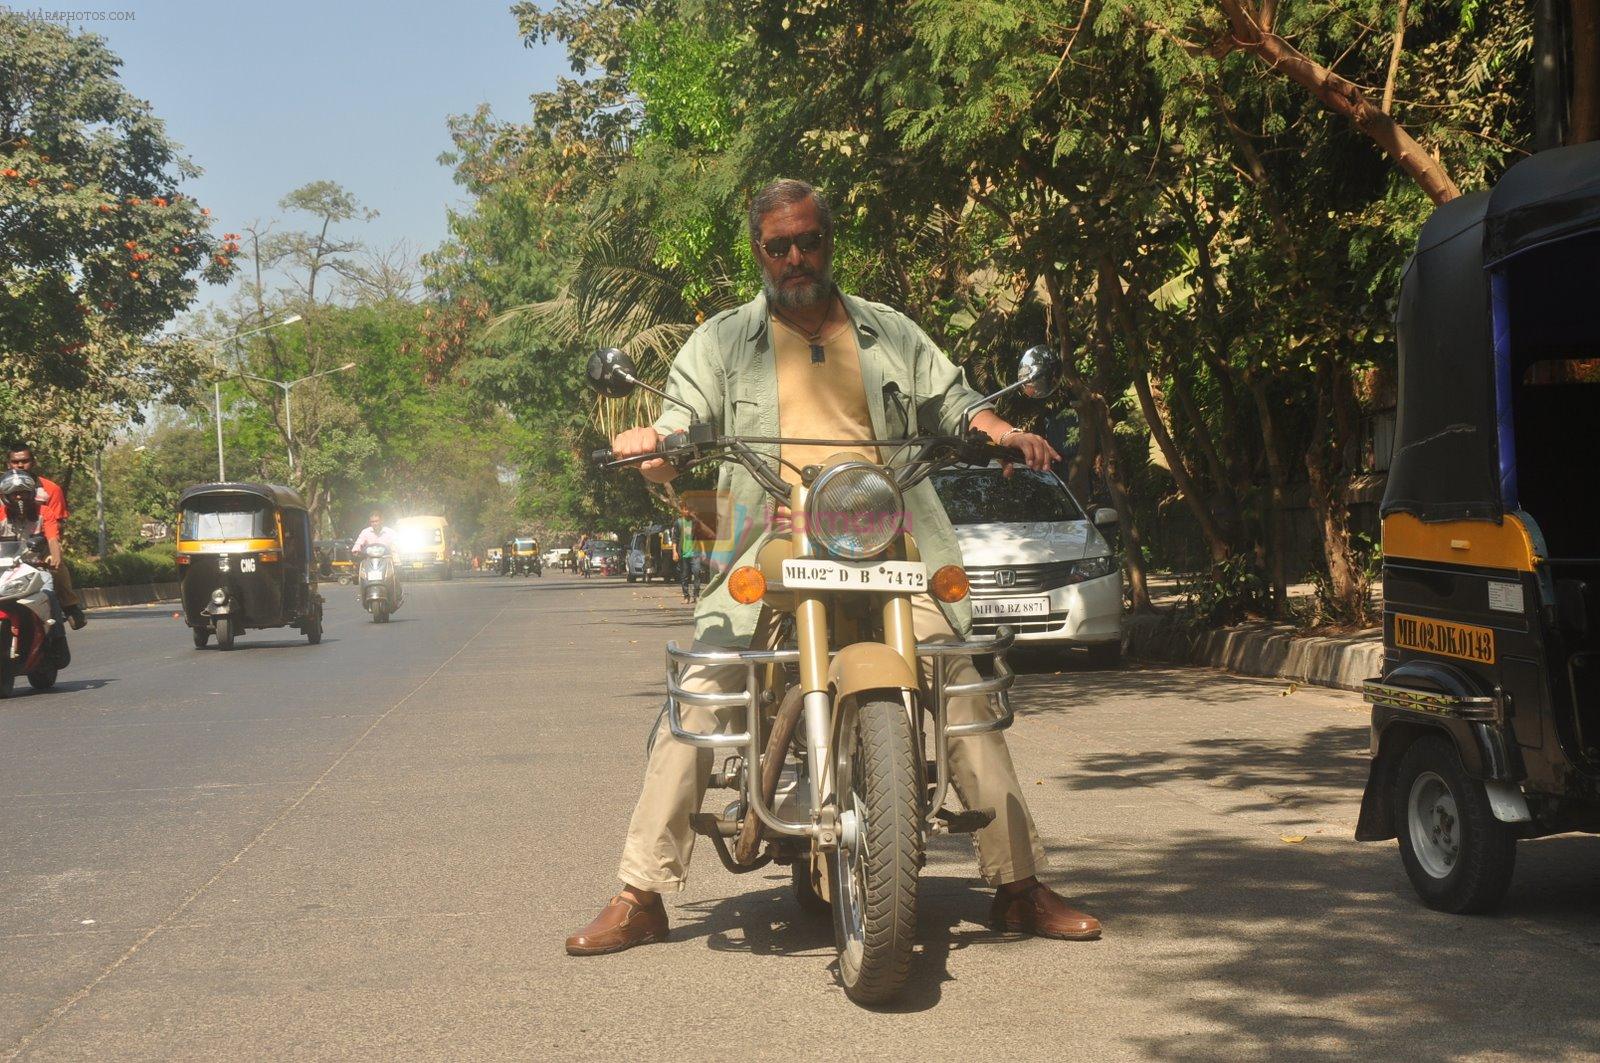 Nana patekar on his bike to promote Ab Tak Chhapan 2 in Andheri, Mumbai on 18th Feb 2015